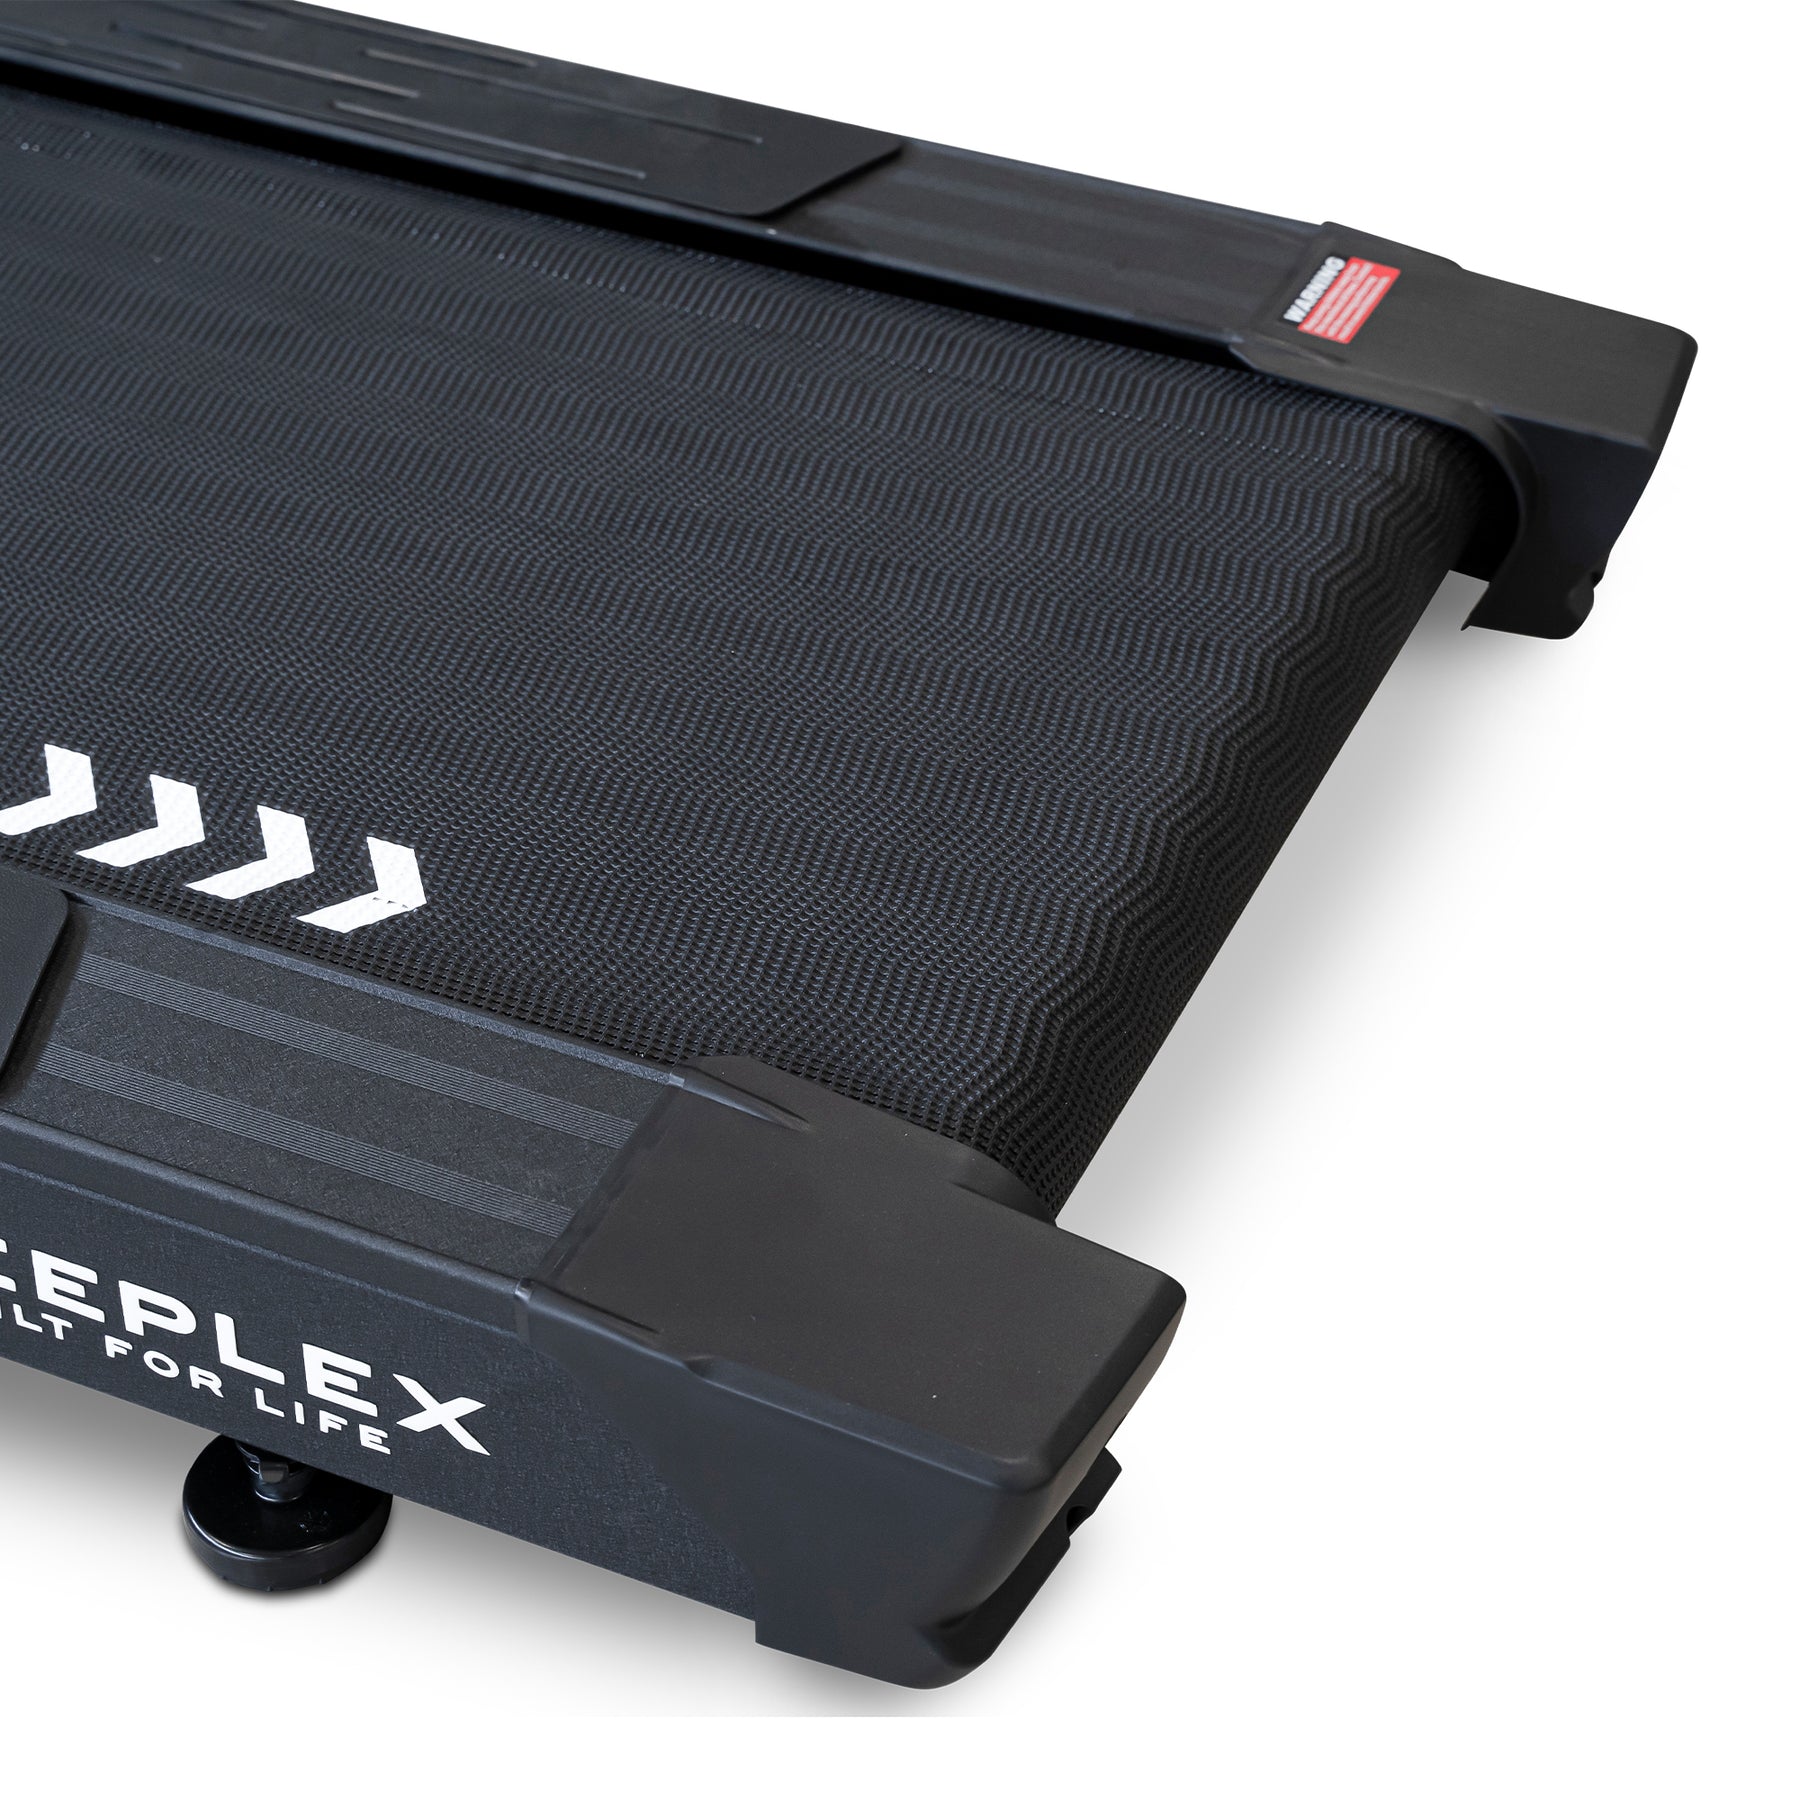 Reeplex T200 Commercial Treadmill Motion Series